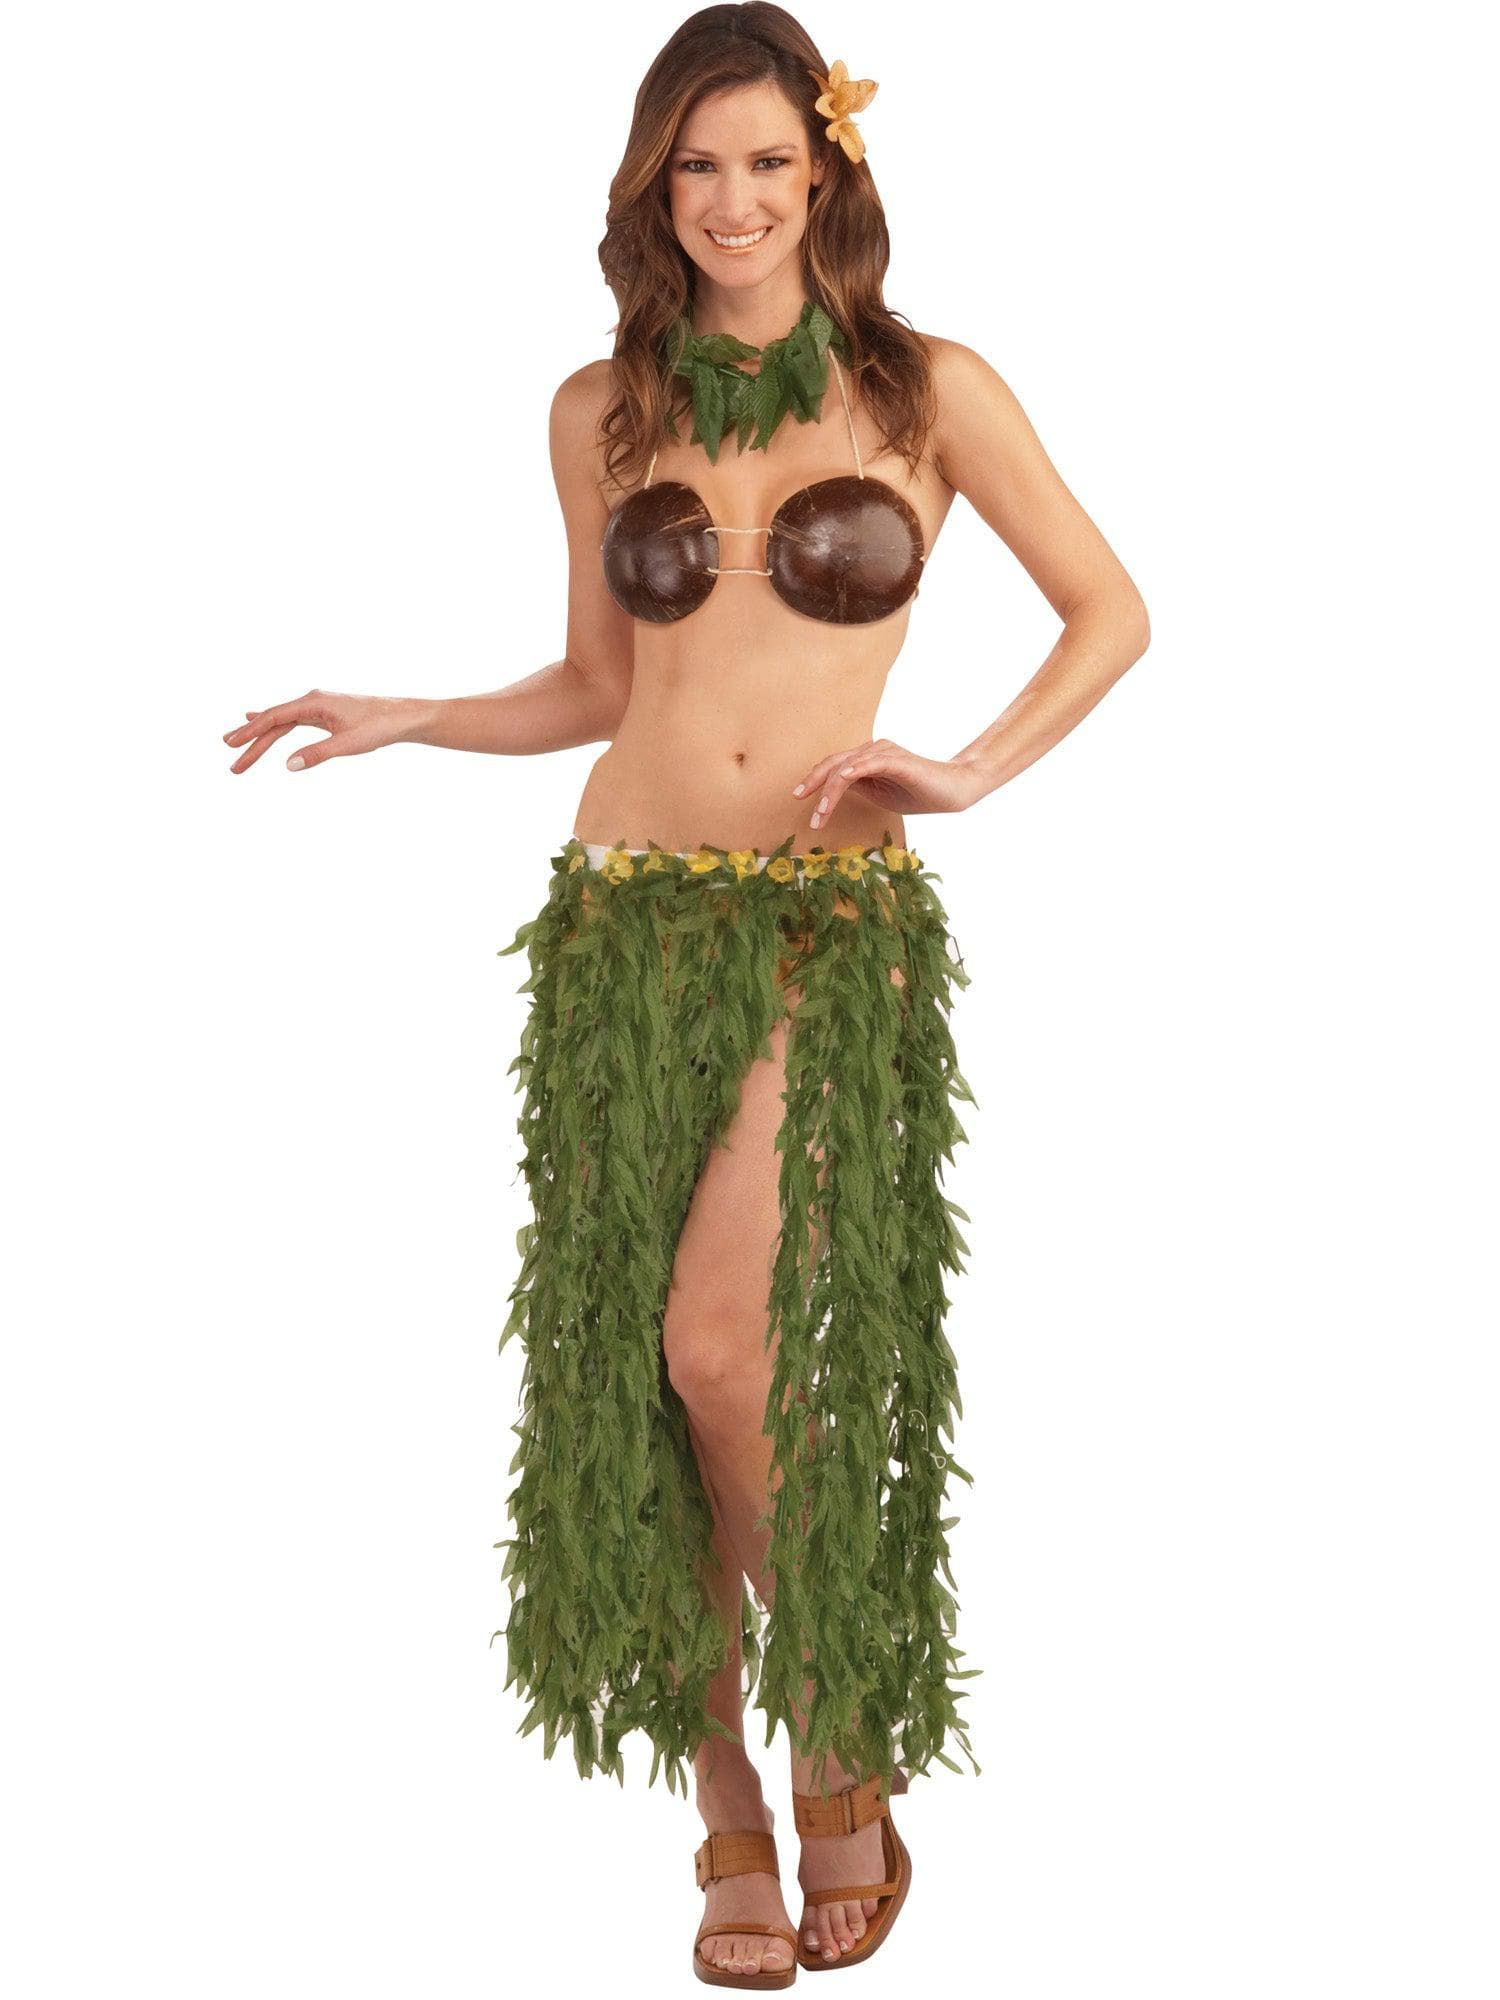 Women's Coconut Bra - costumes.com